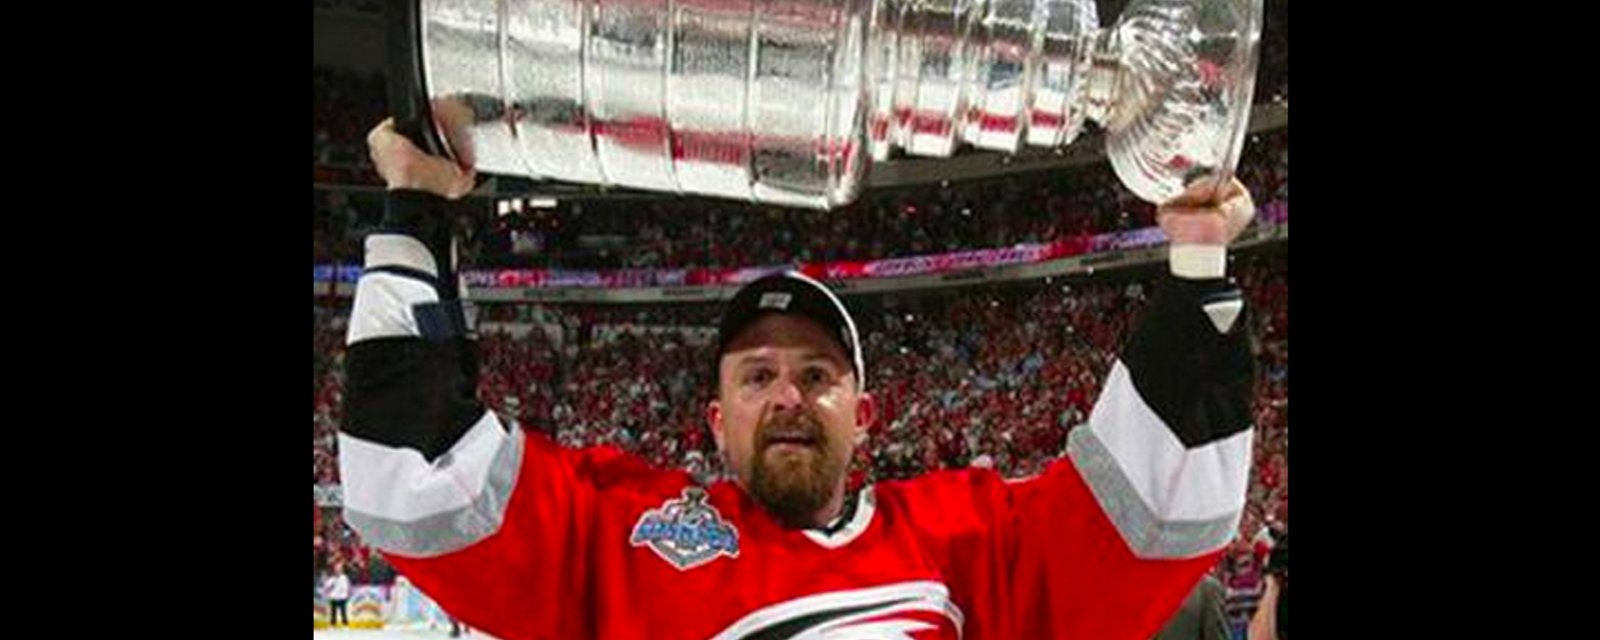 Former NHLer Cory Stillman leaves the OHL for NHL coaching job